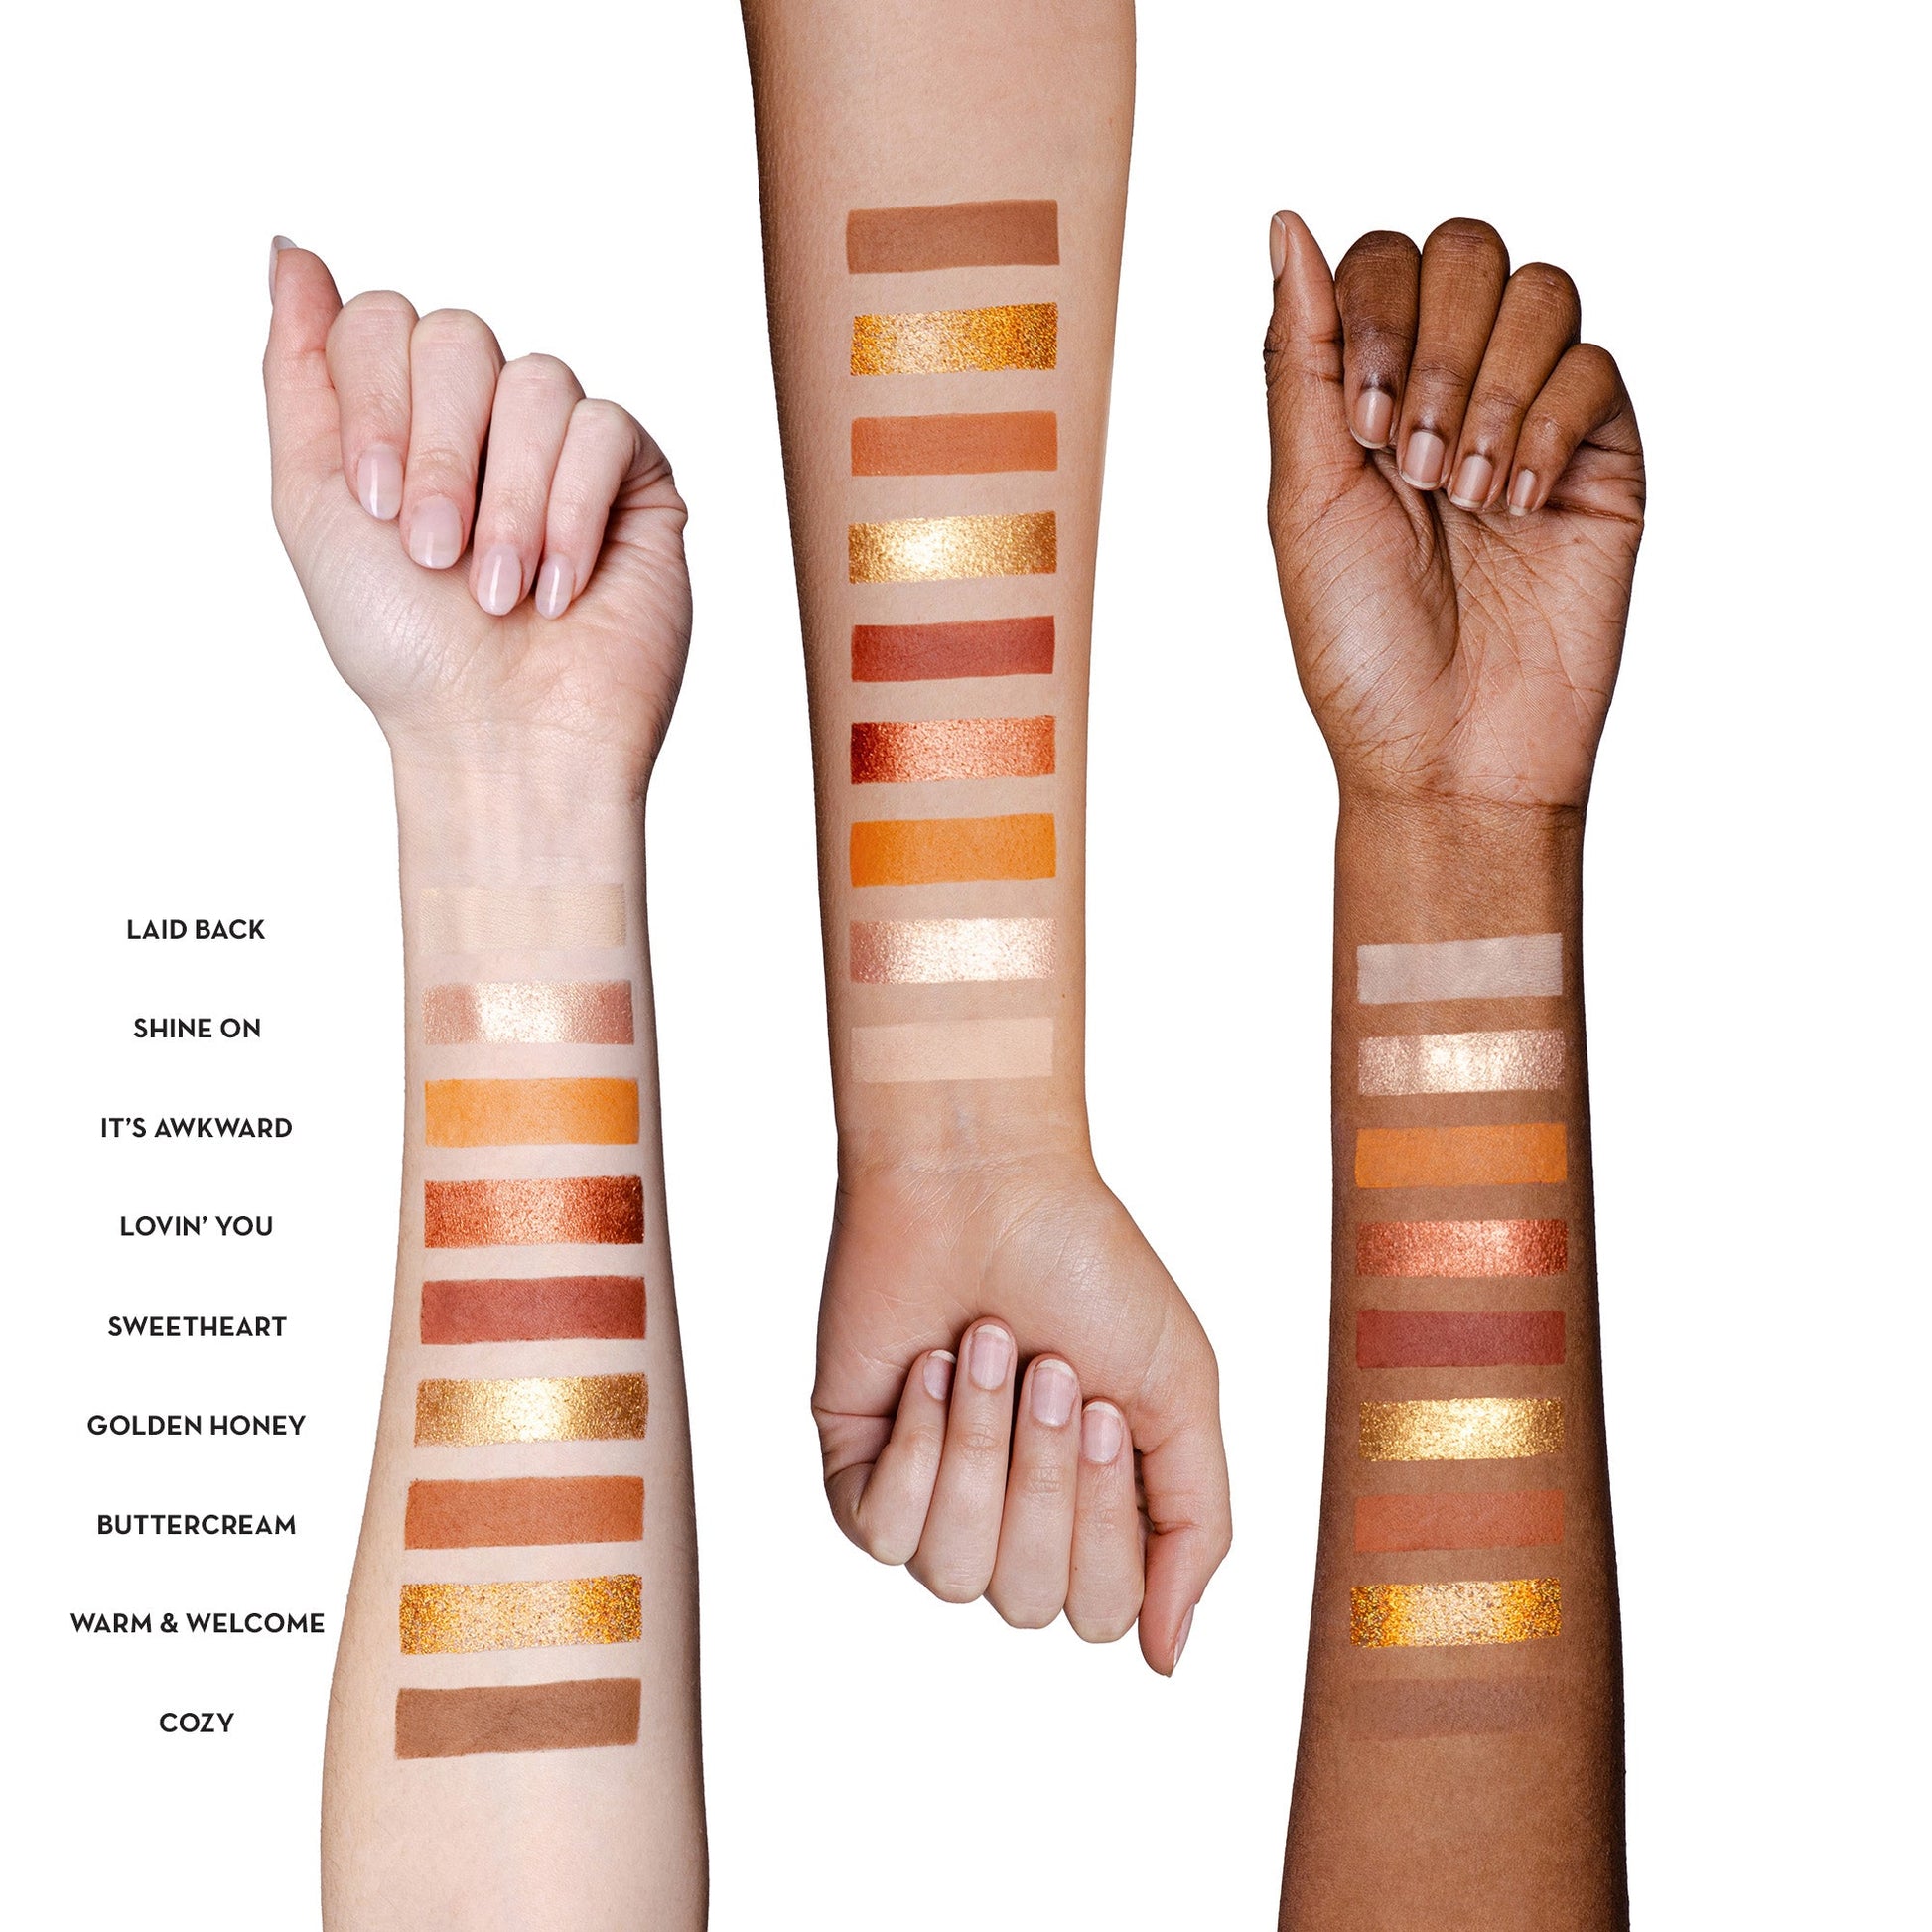 LINE FRIENDS BROWN Eyeshadow Palette — The Crème Shop